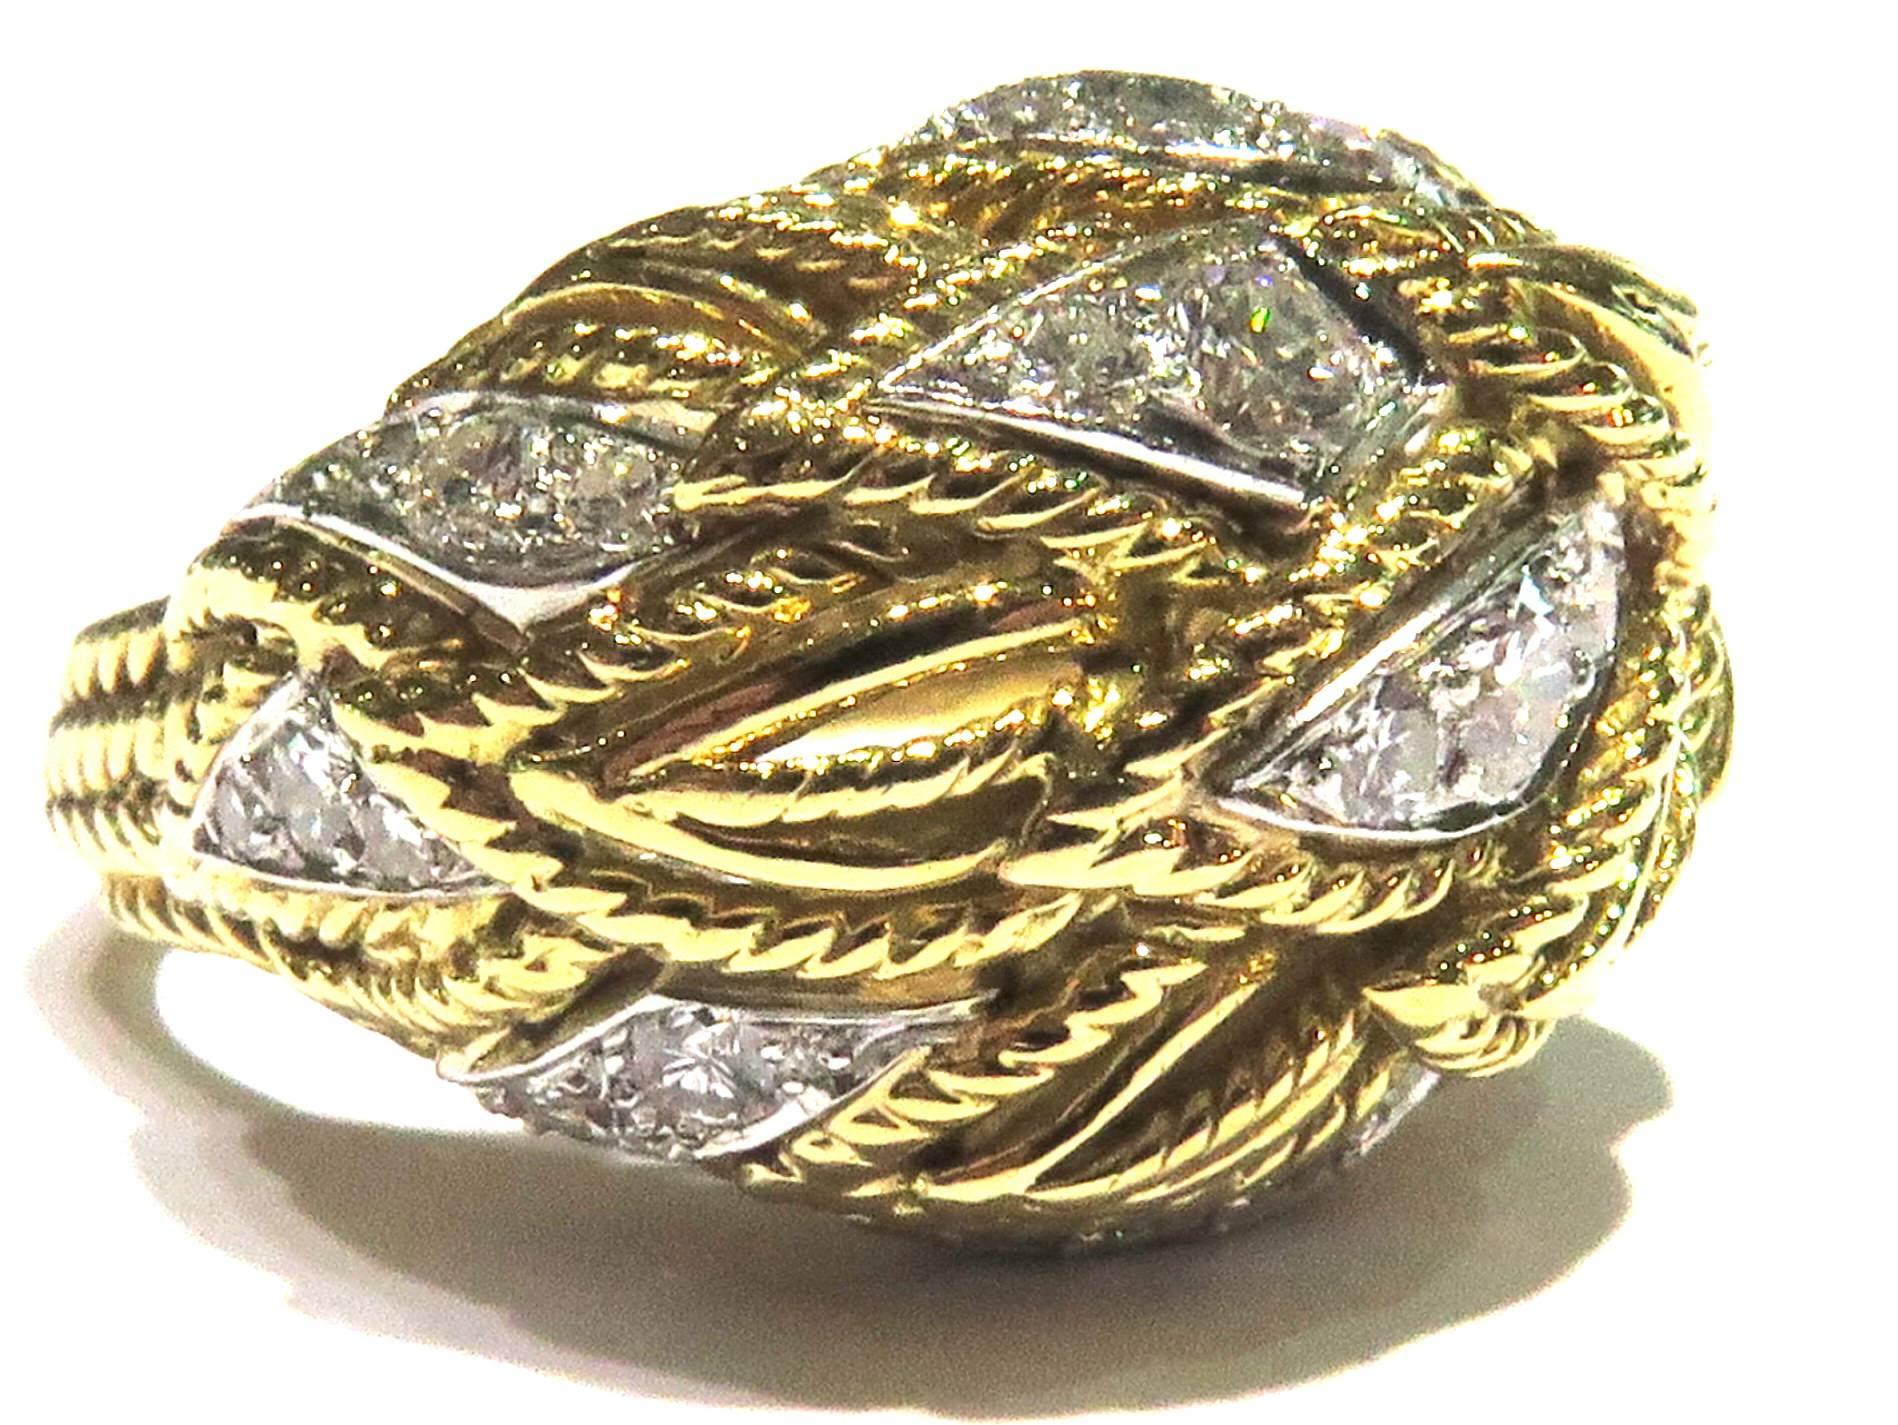 Timeless Van Cleef & Arpels Diamonds in Woven Leaf Design Gold Domed Ring 2